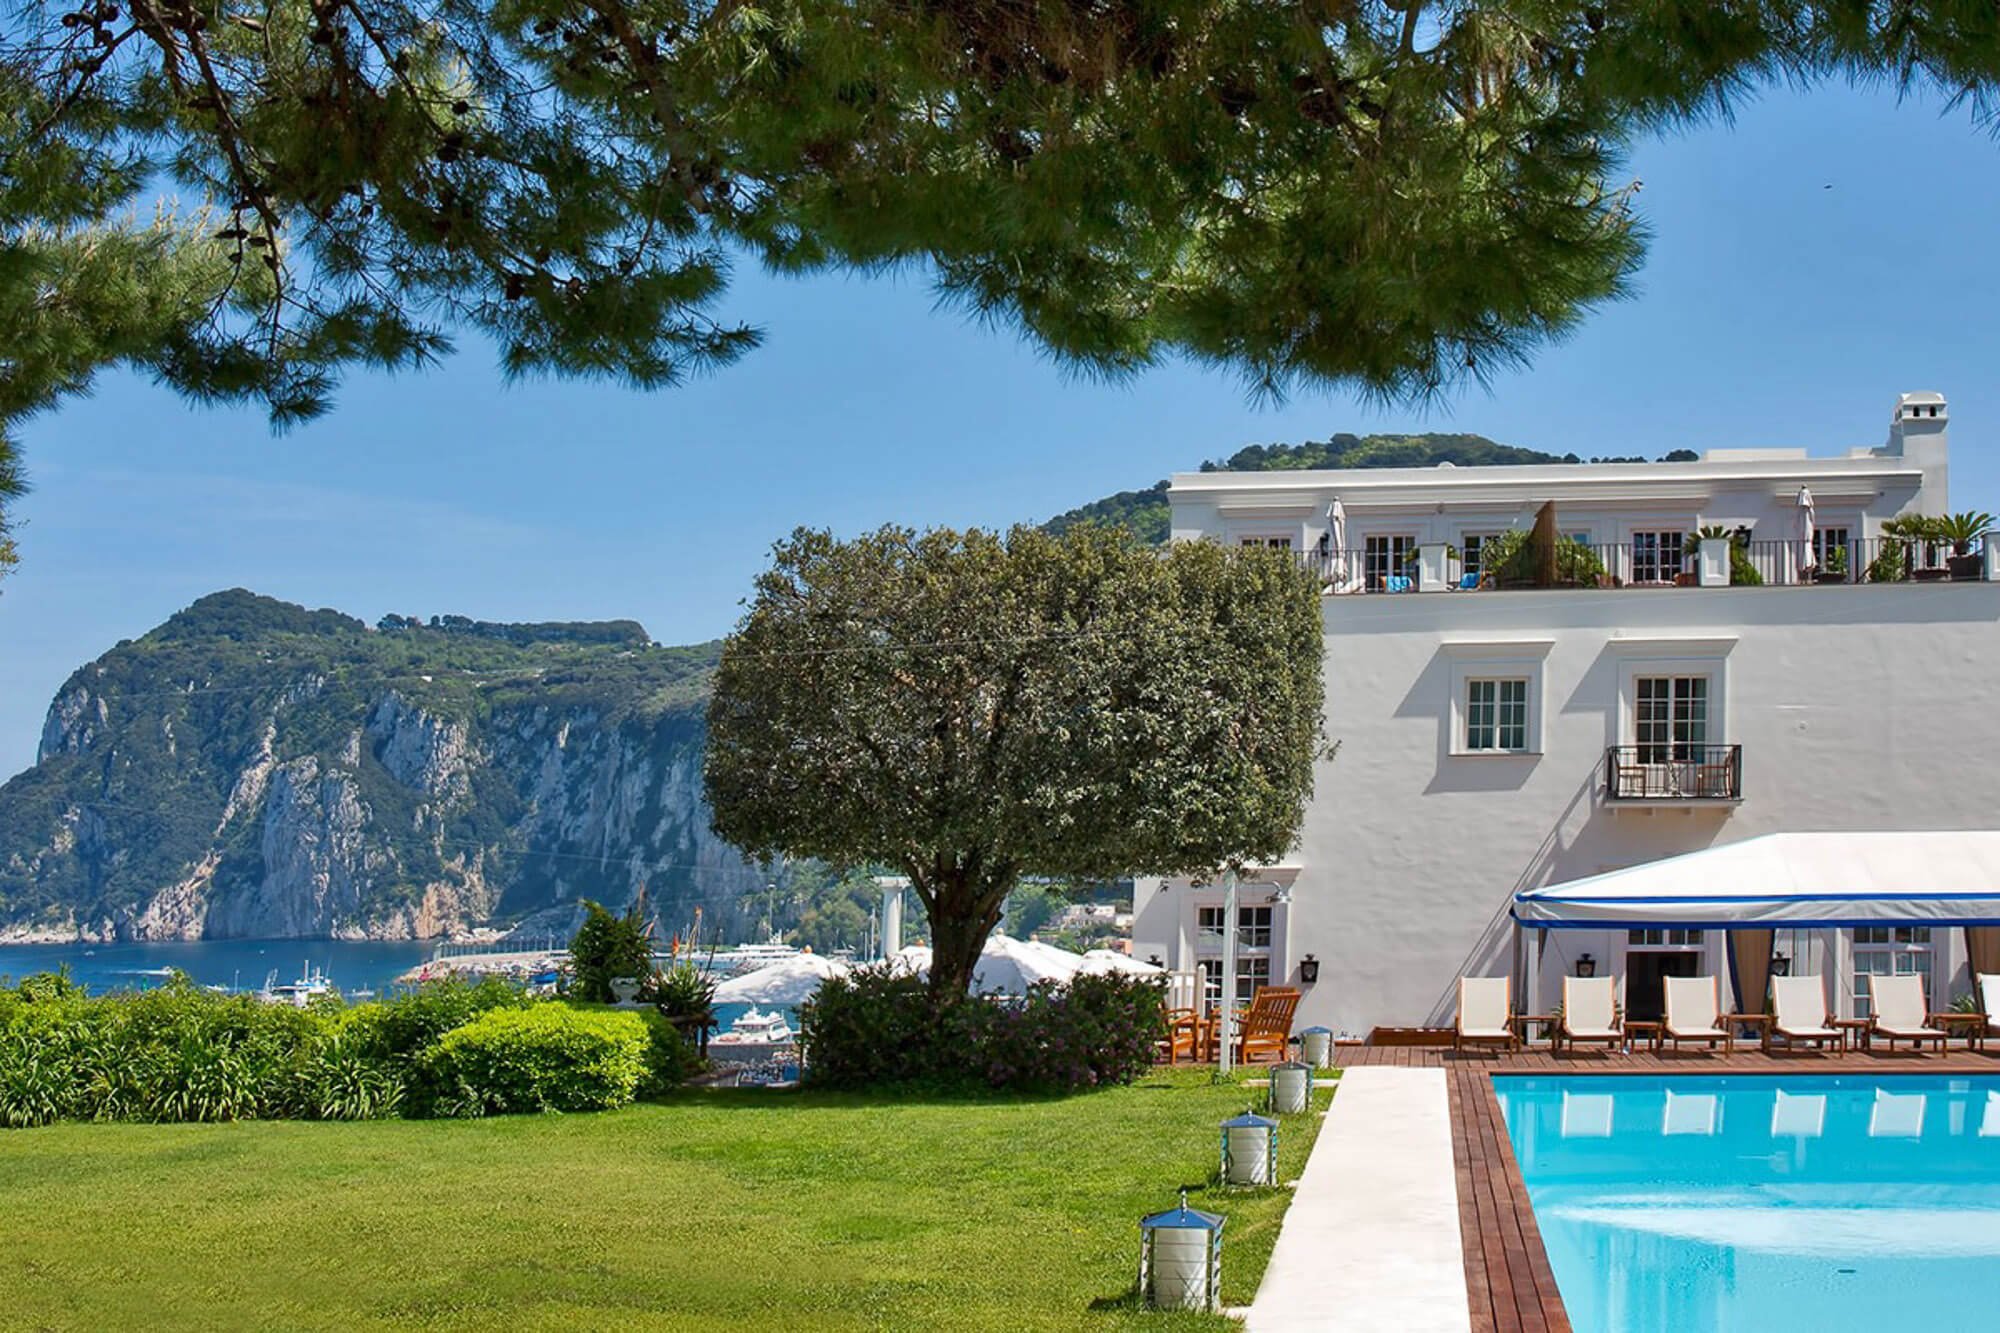 Best hotels Capri: 5 star JK Place